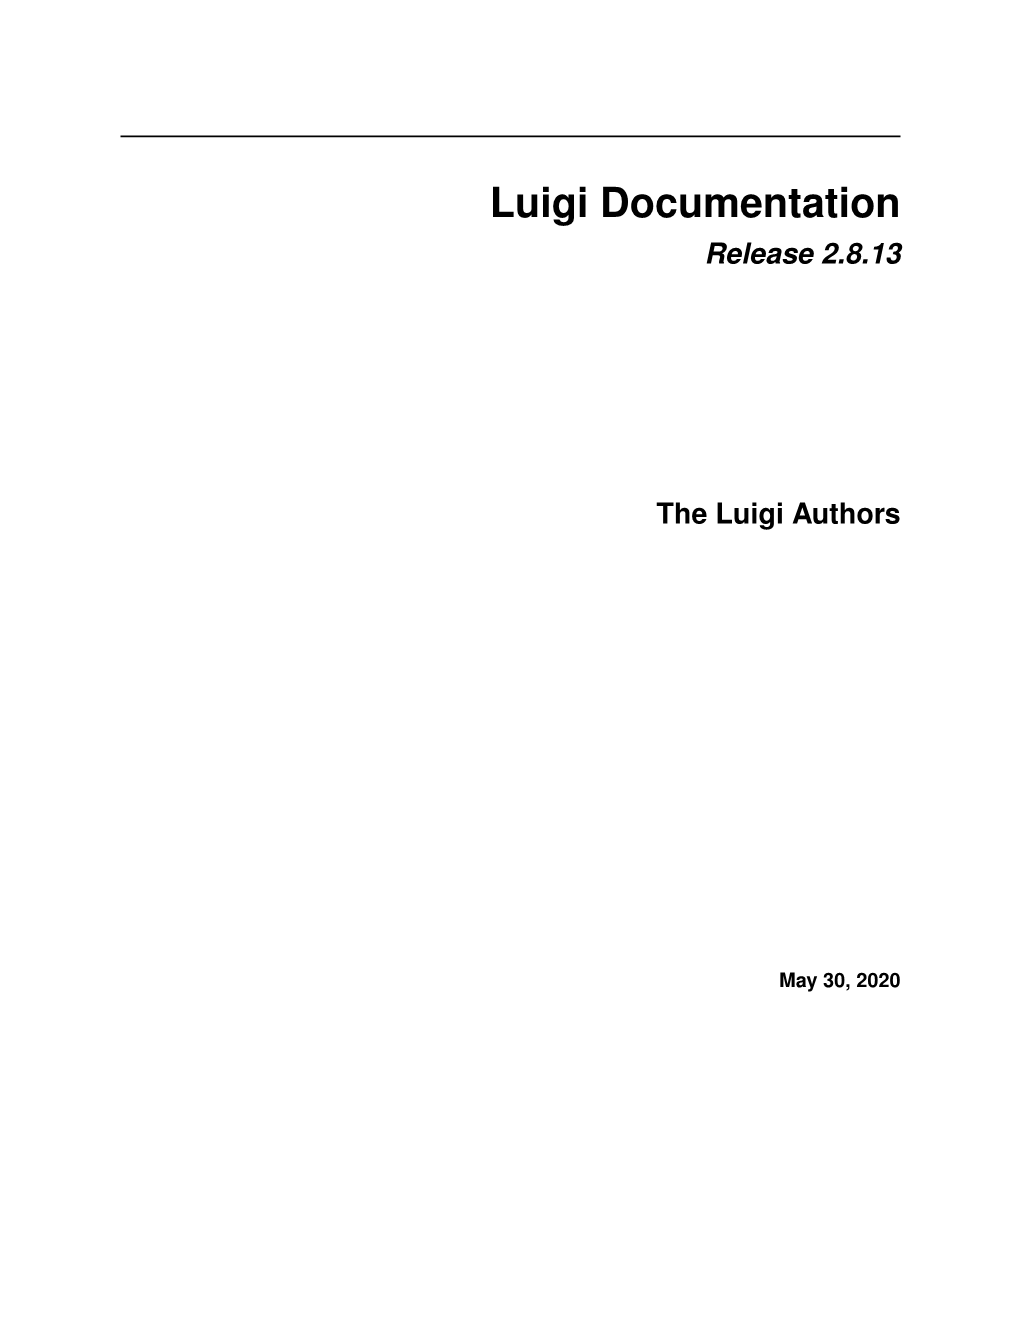 Luigi Documentation Release 2.8.13